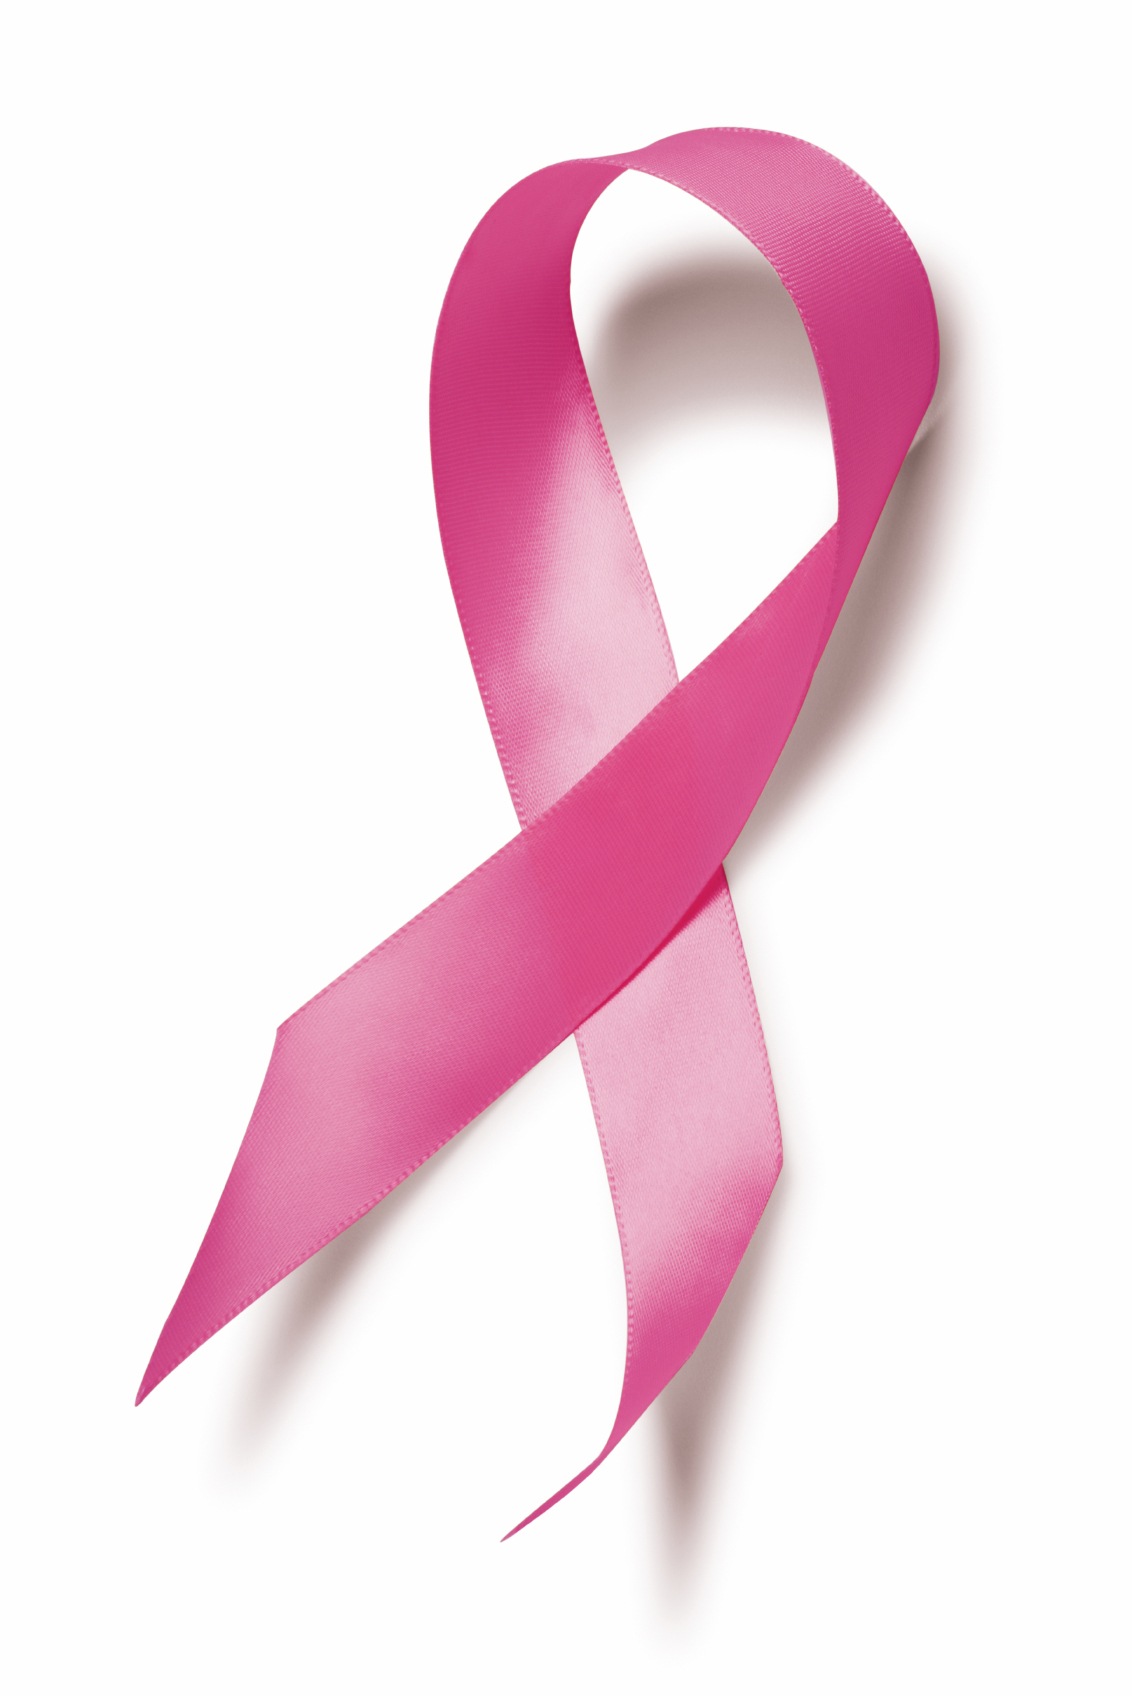 Hate Squishing the Girls? 5 Possible Mammogram Alternatives